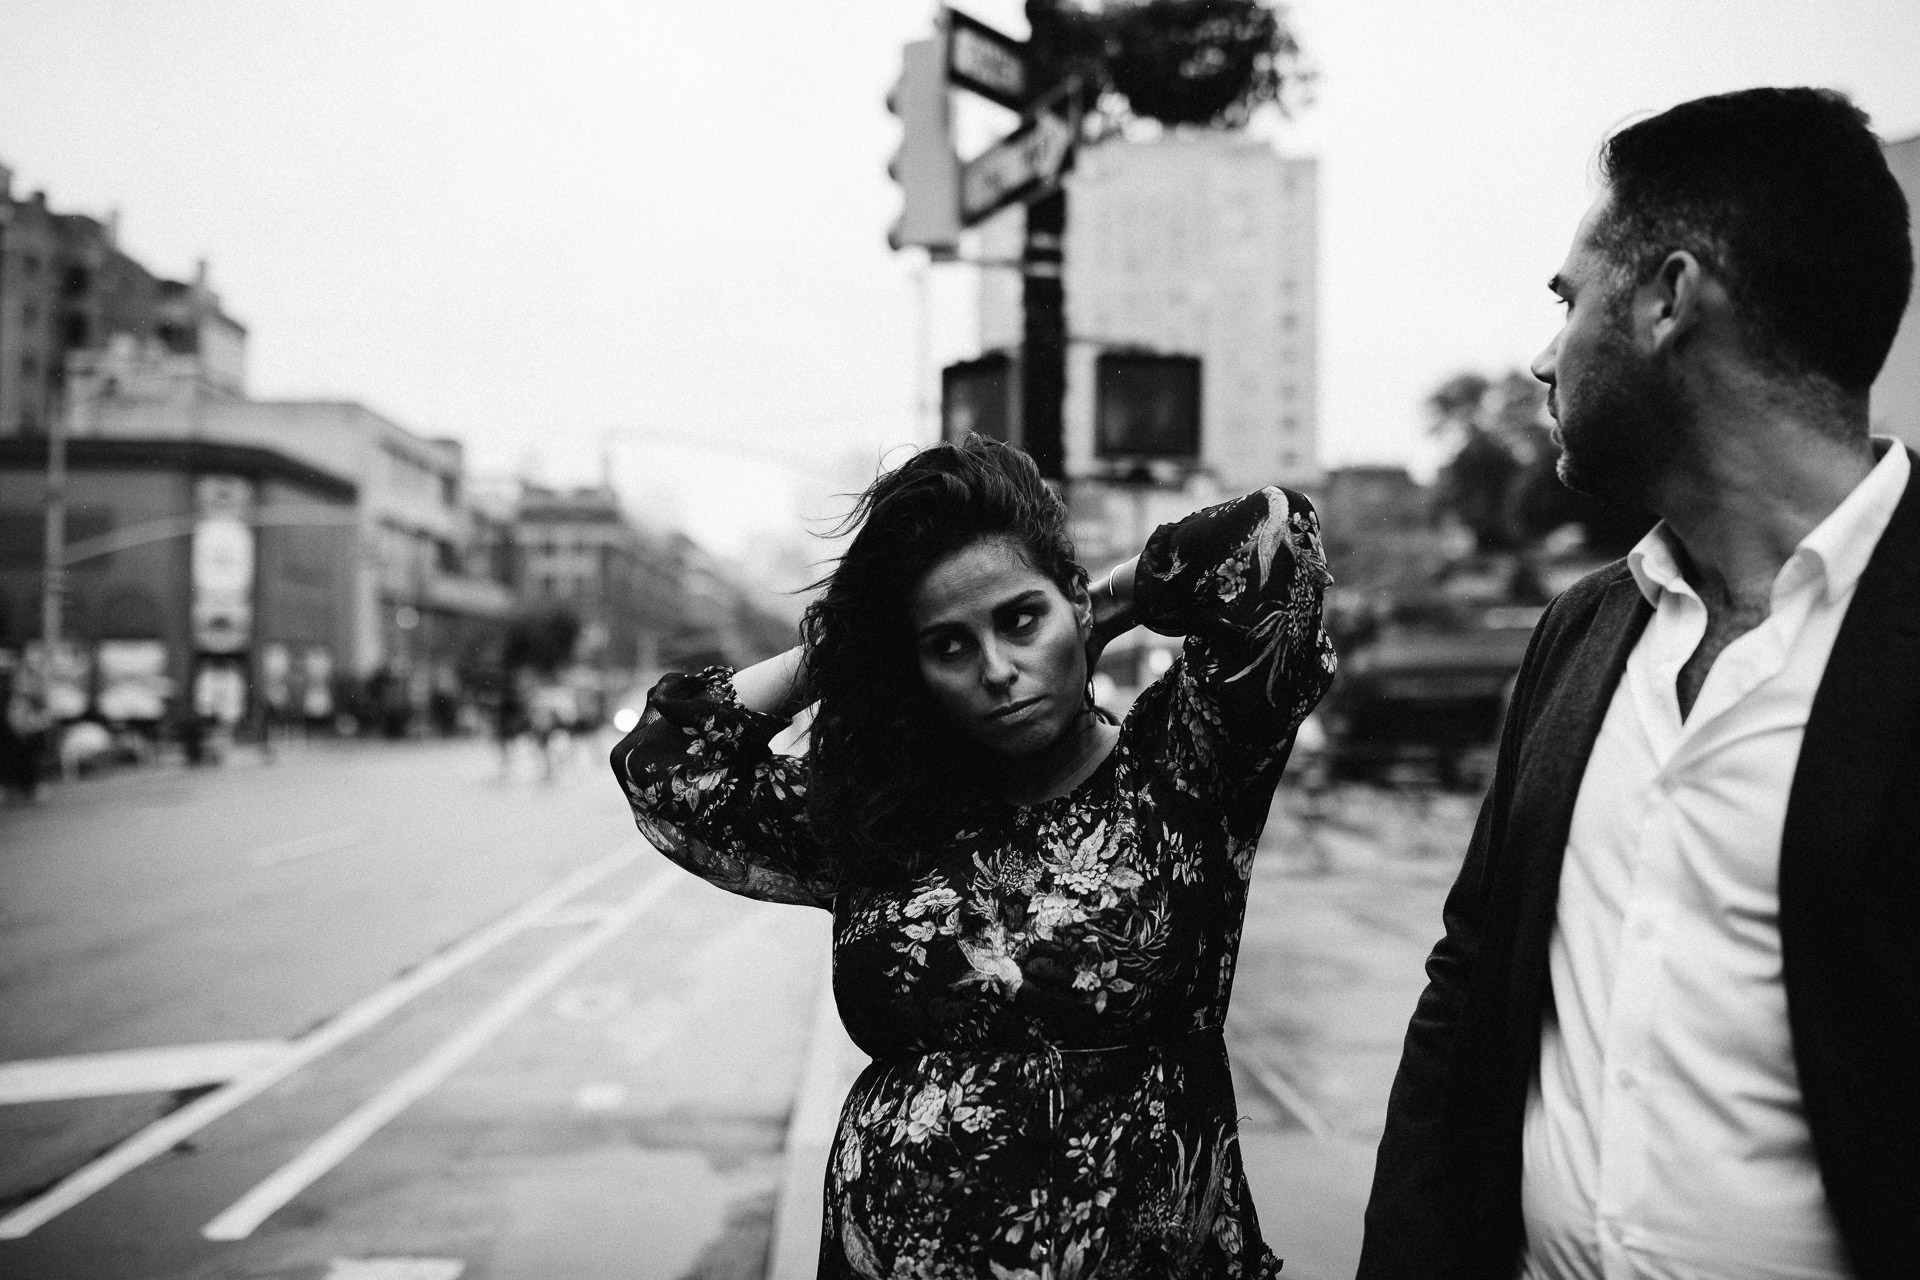 Rime Arodaki & Greg Finck Fall Engagement in West Village, New York City by Jean-Laurent Gaudy